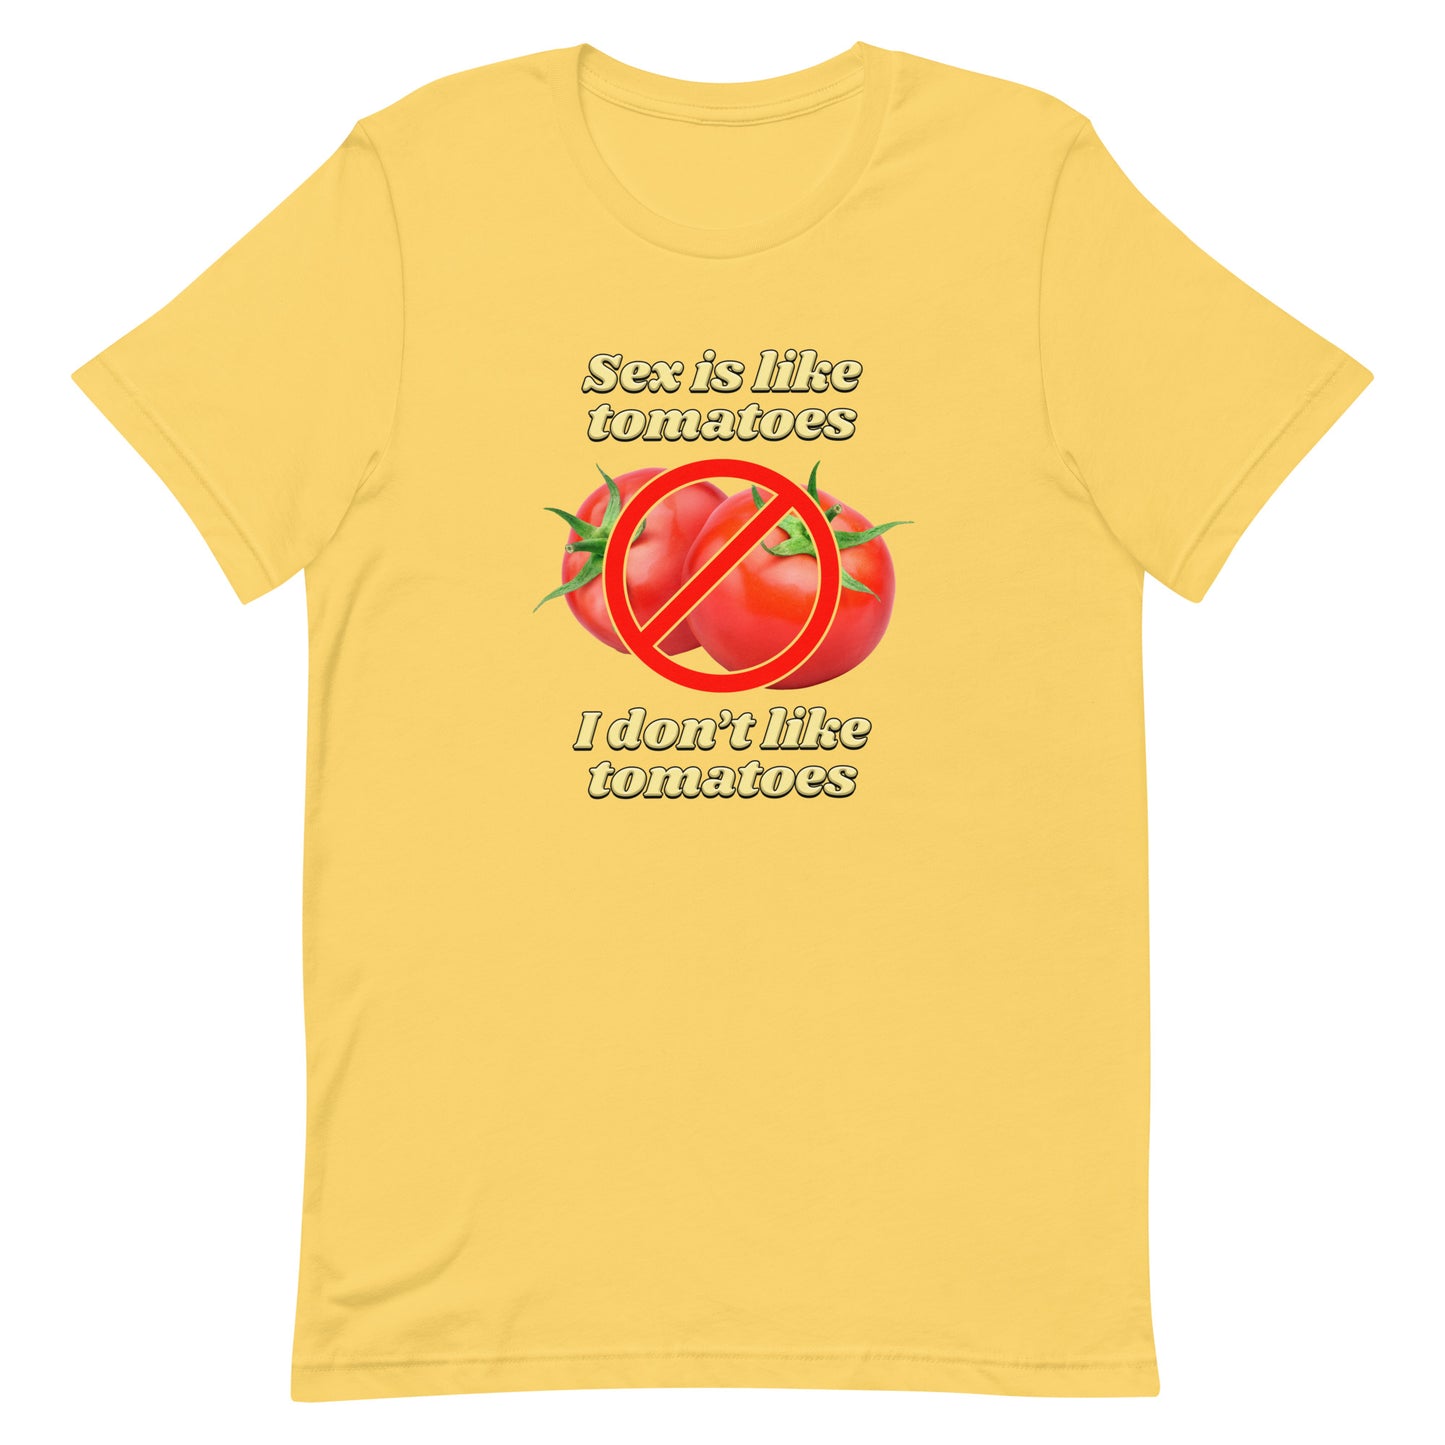 Sex is Like Tomatoes I Don't Like Tomatoes Unisex t-shirt